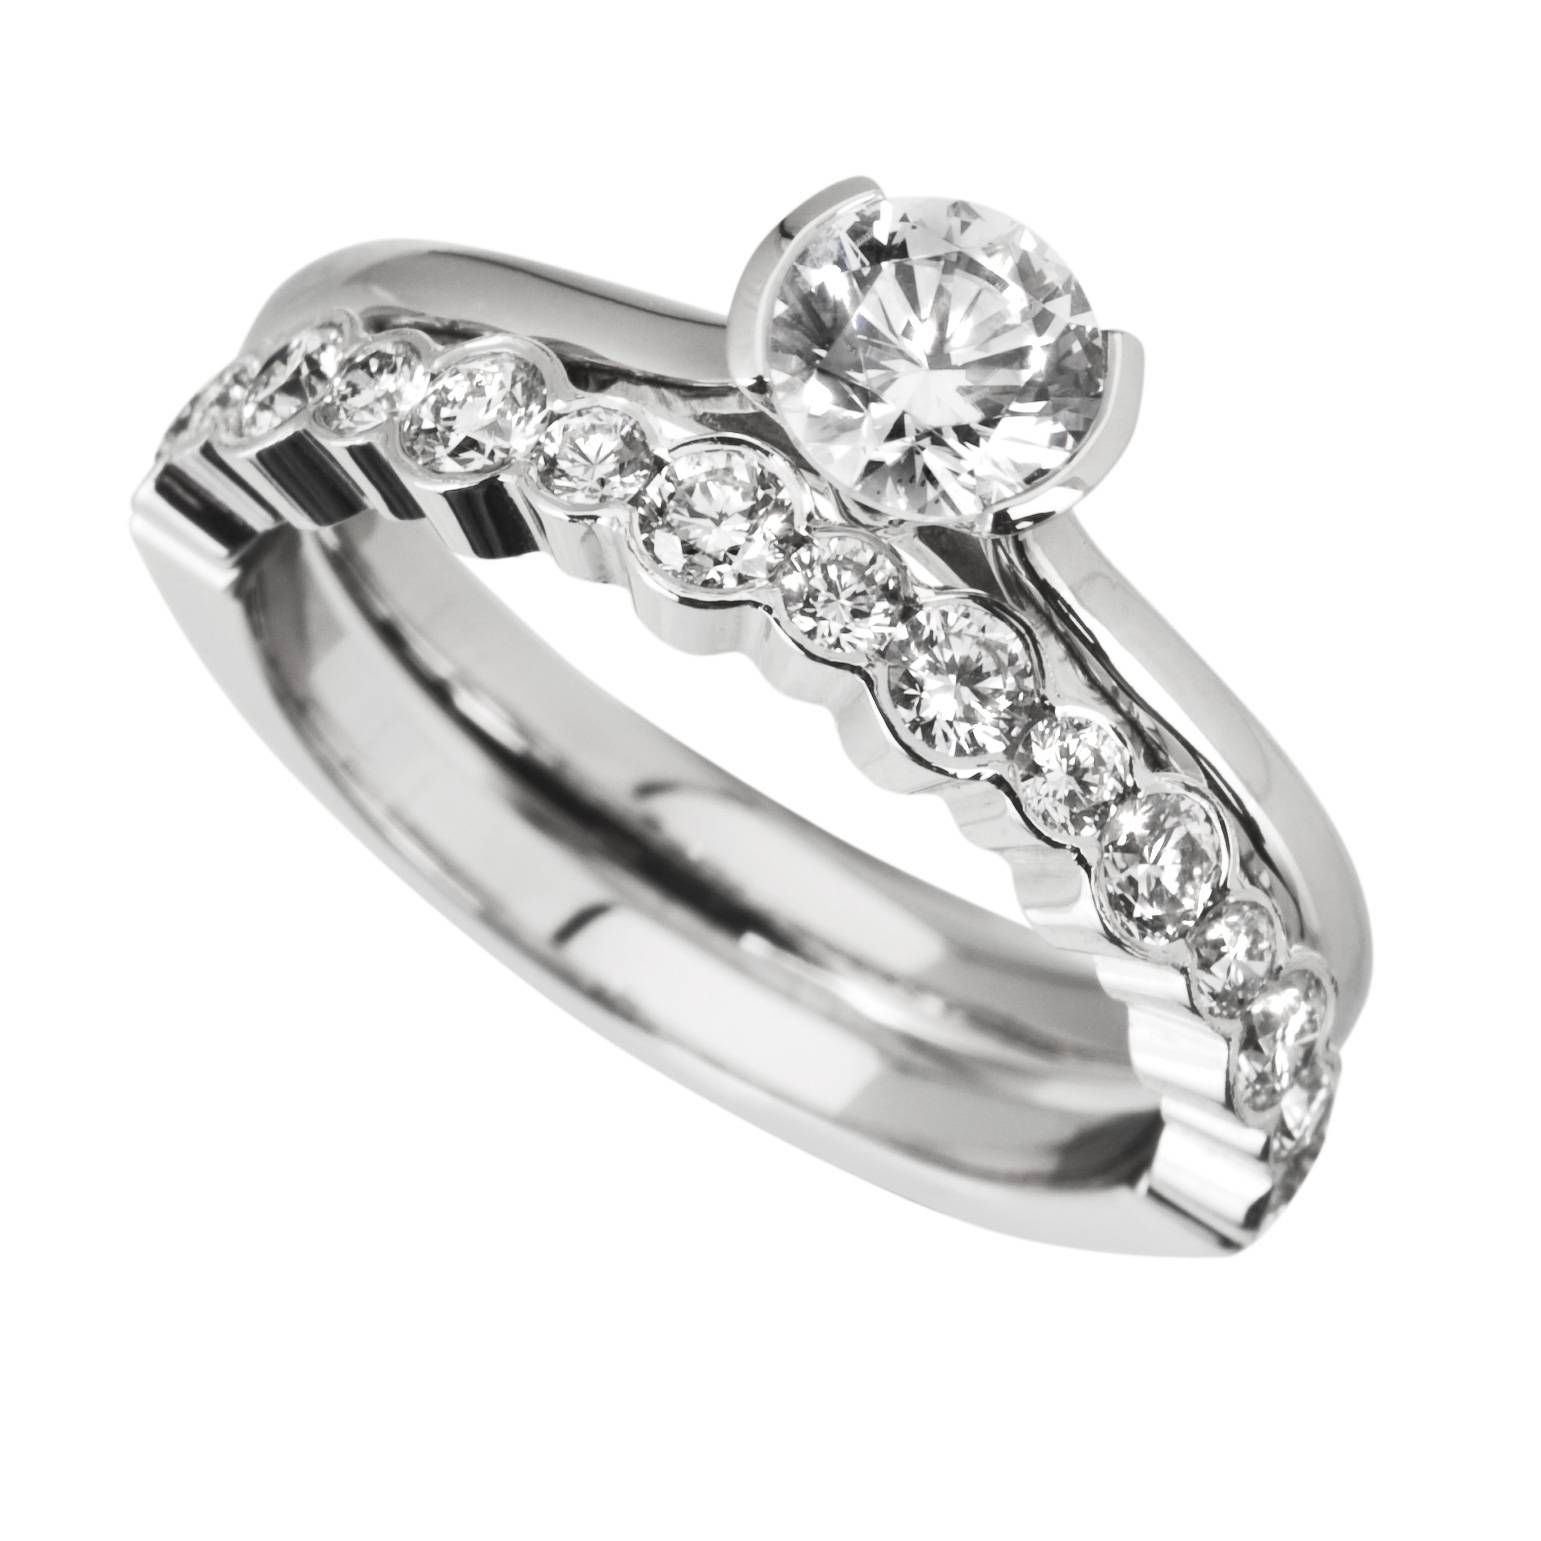 Wedding Rings : Wedding Engagement Ring Set Engagement Ring Sets Intended For Wedding And Engagement Bands (View 2 of 15)